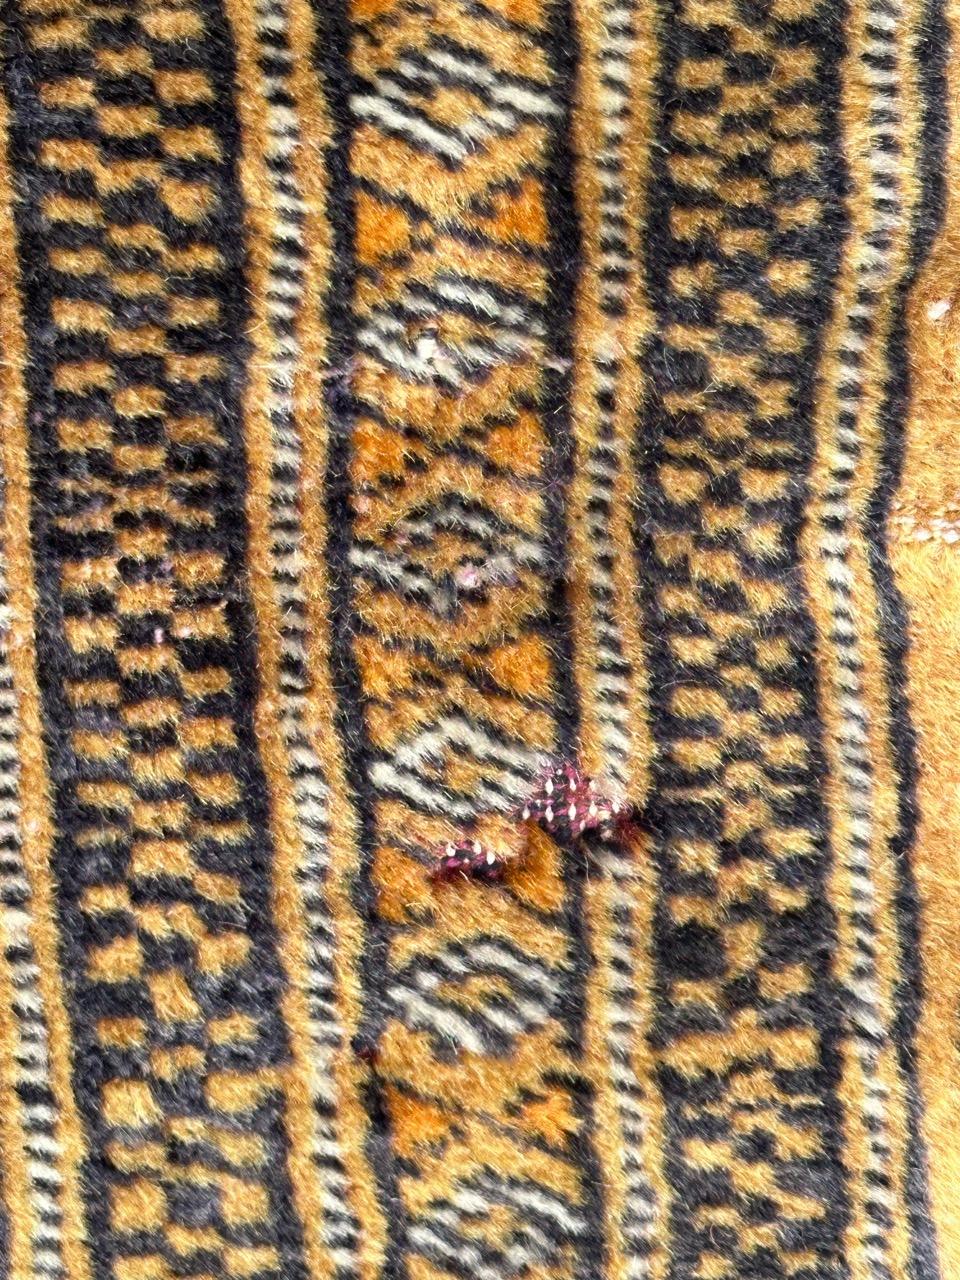 Bobyrug’s pretty vintage Pakistani chuval Turkmen style rug  For Sale 12